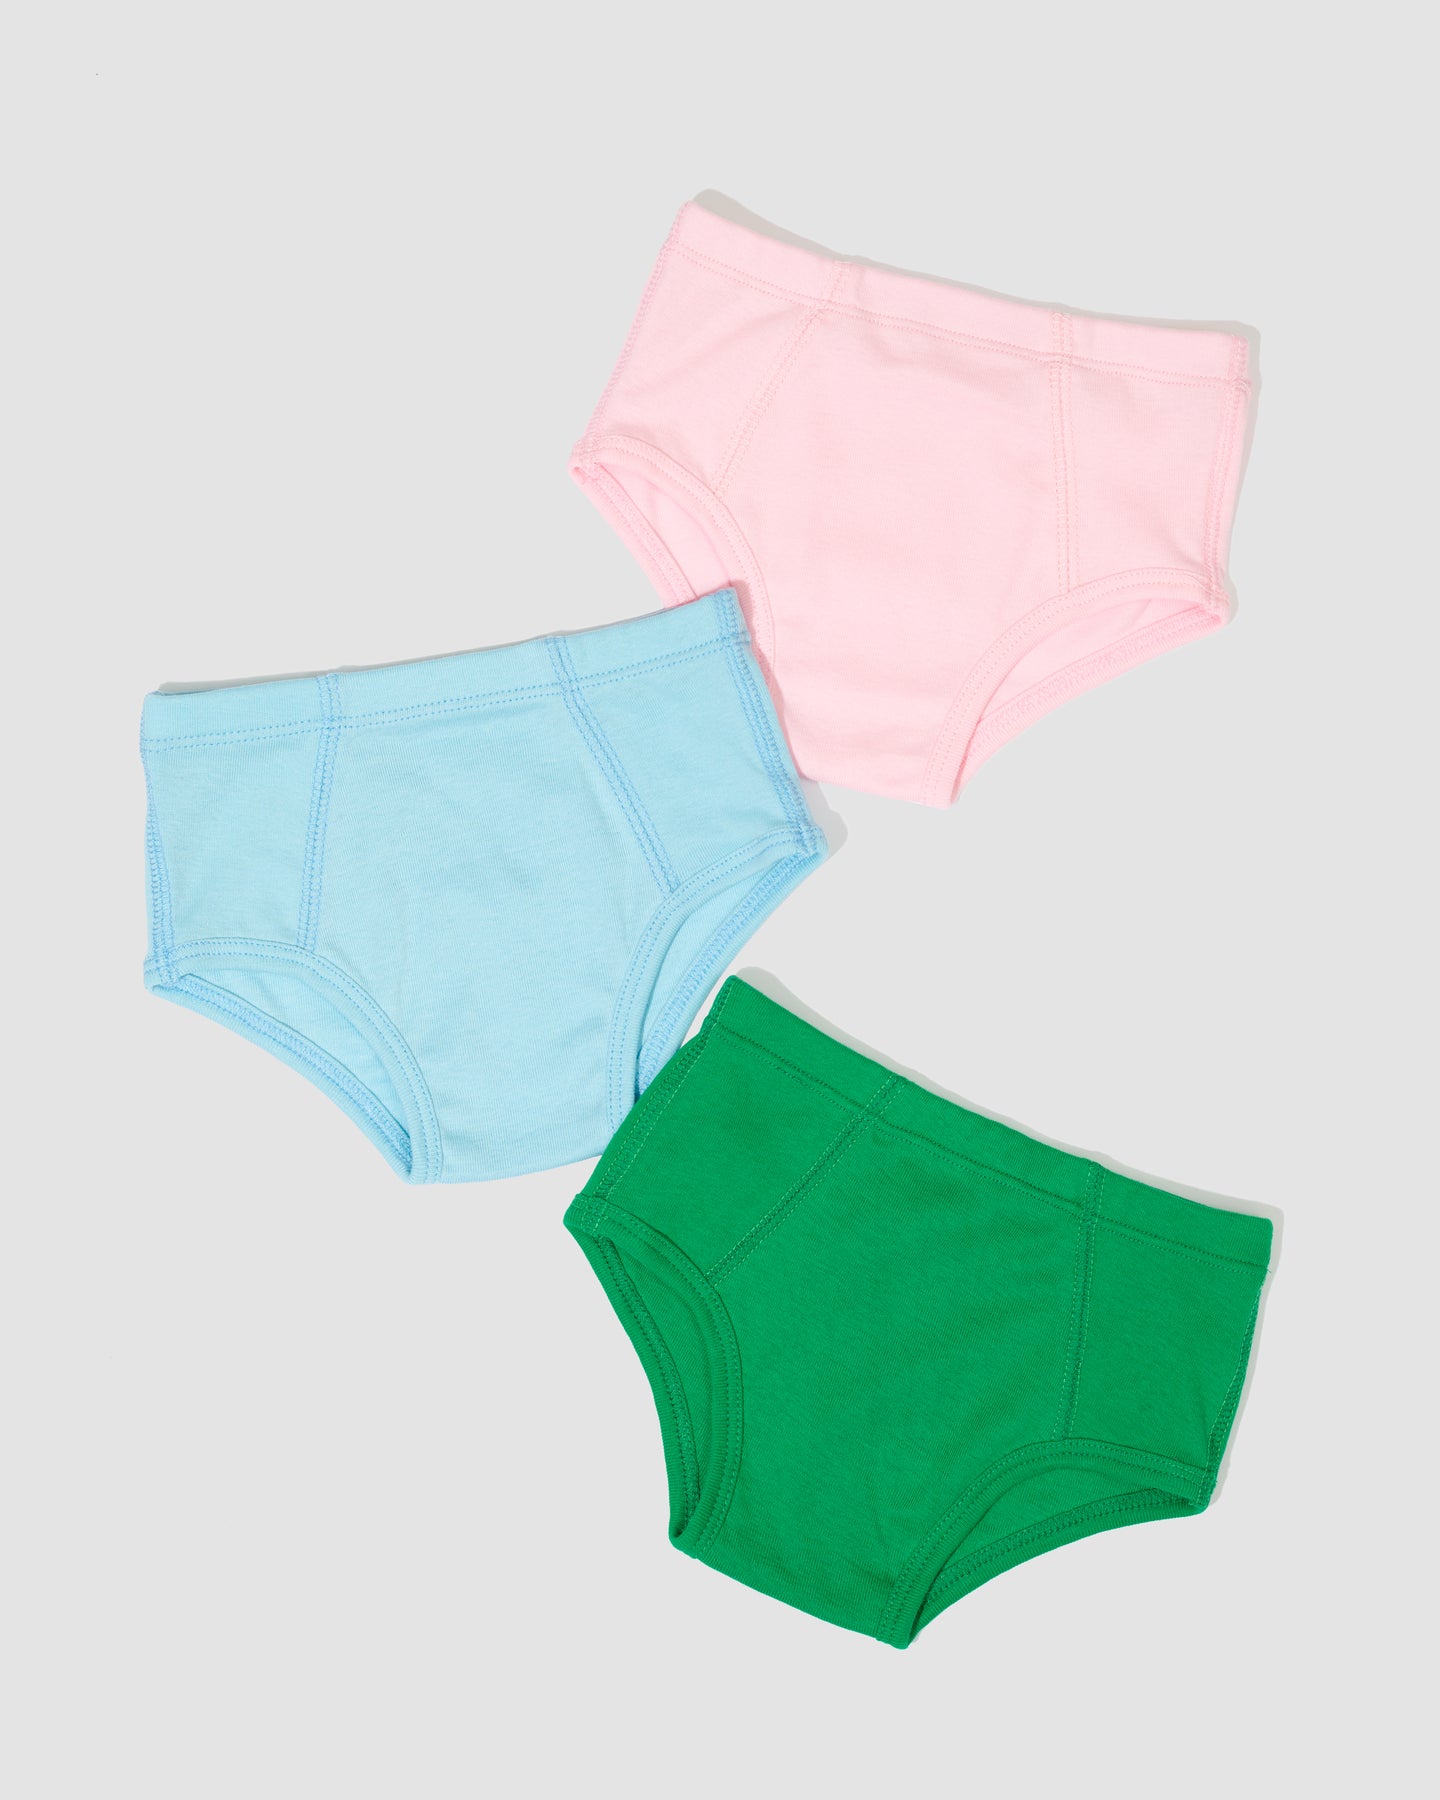 New Day Boys Cotton Brief Multicoloured  Boys Underwear Pack of 10 :  : Fashion